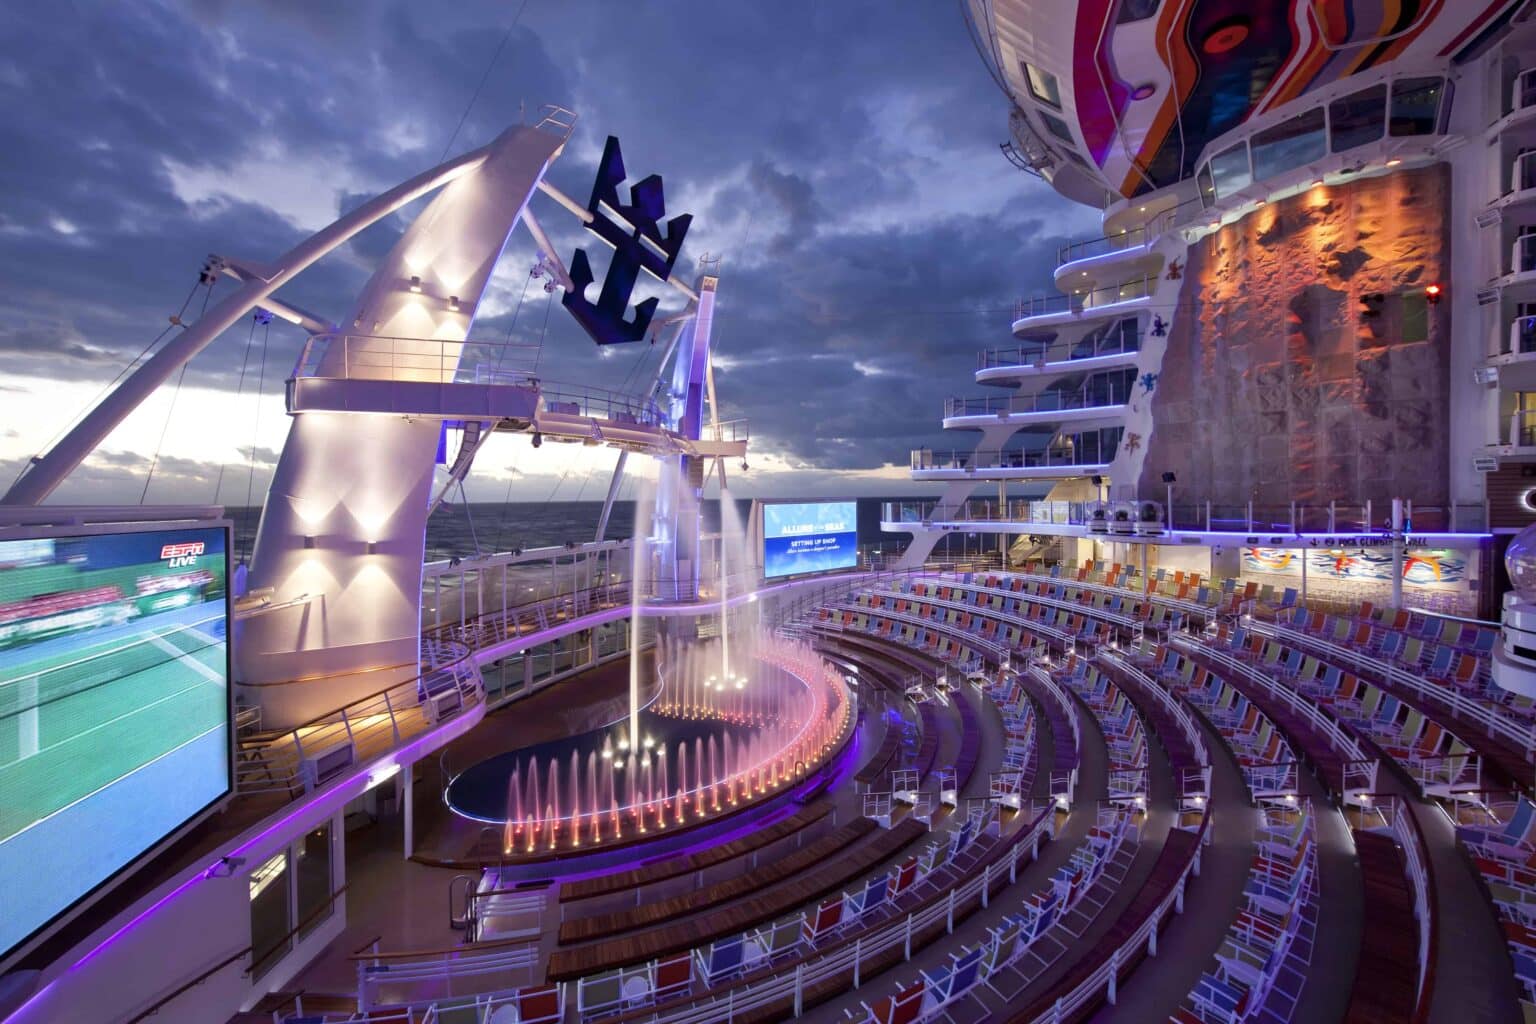 casino royal anniversary cruise offer